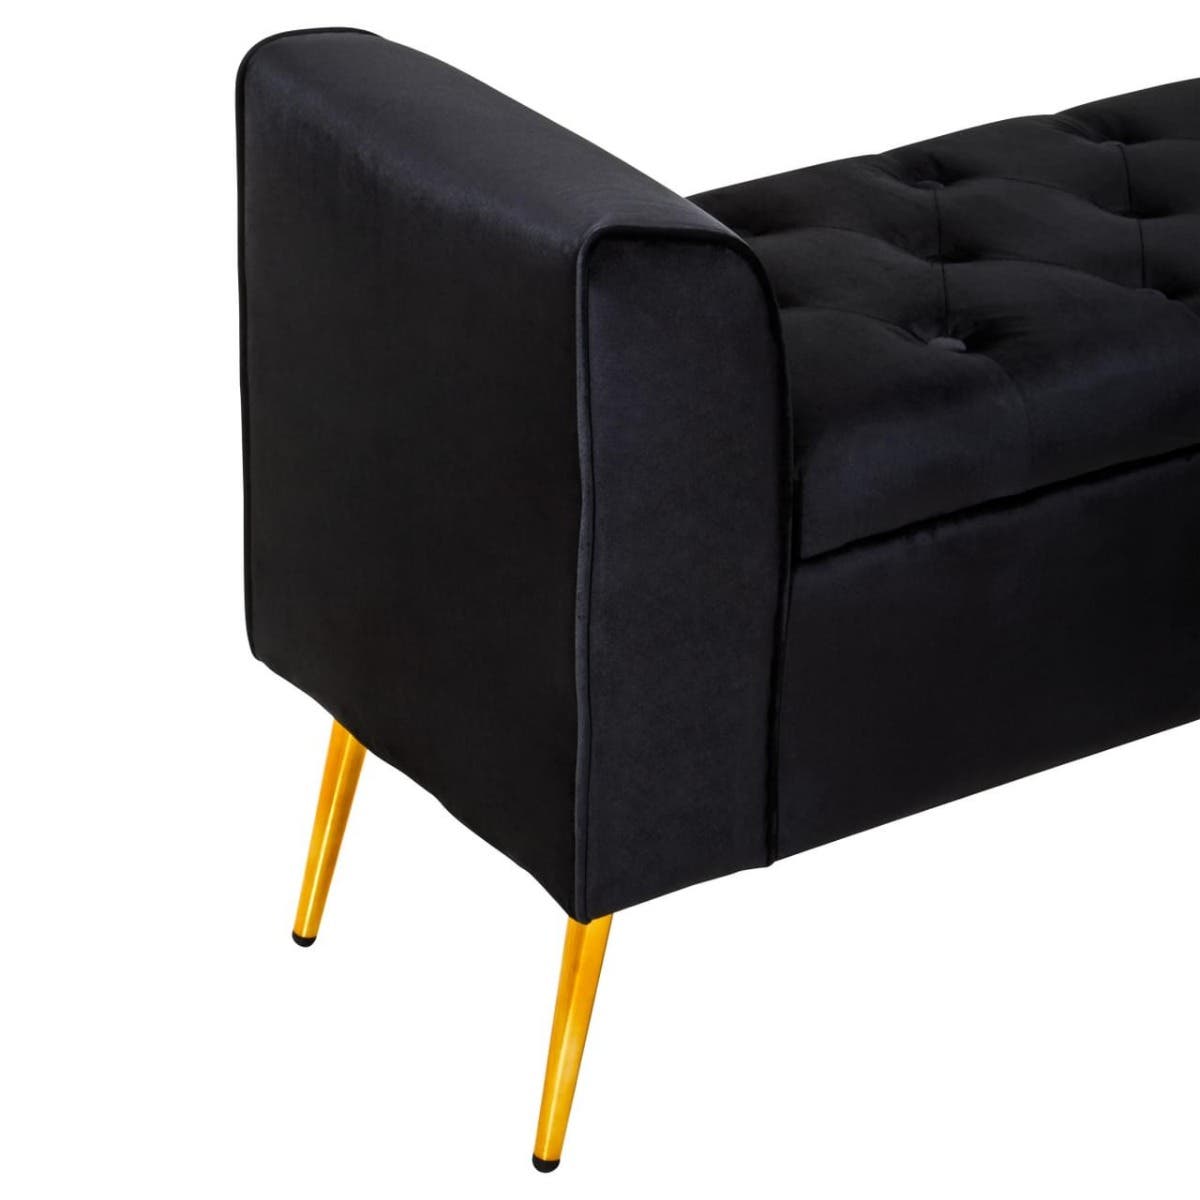 Elara Beluga Black Velvet Cushion Storage Bench With Angular Gold Finish Iron Legs